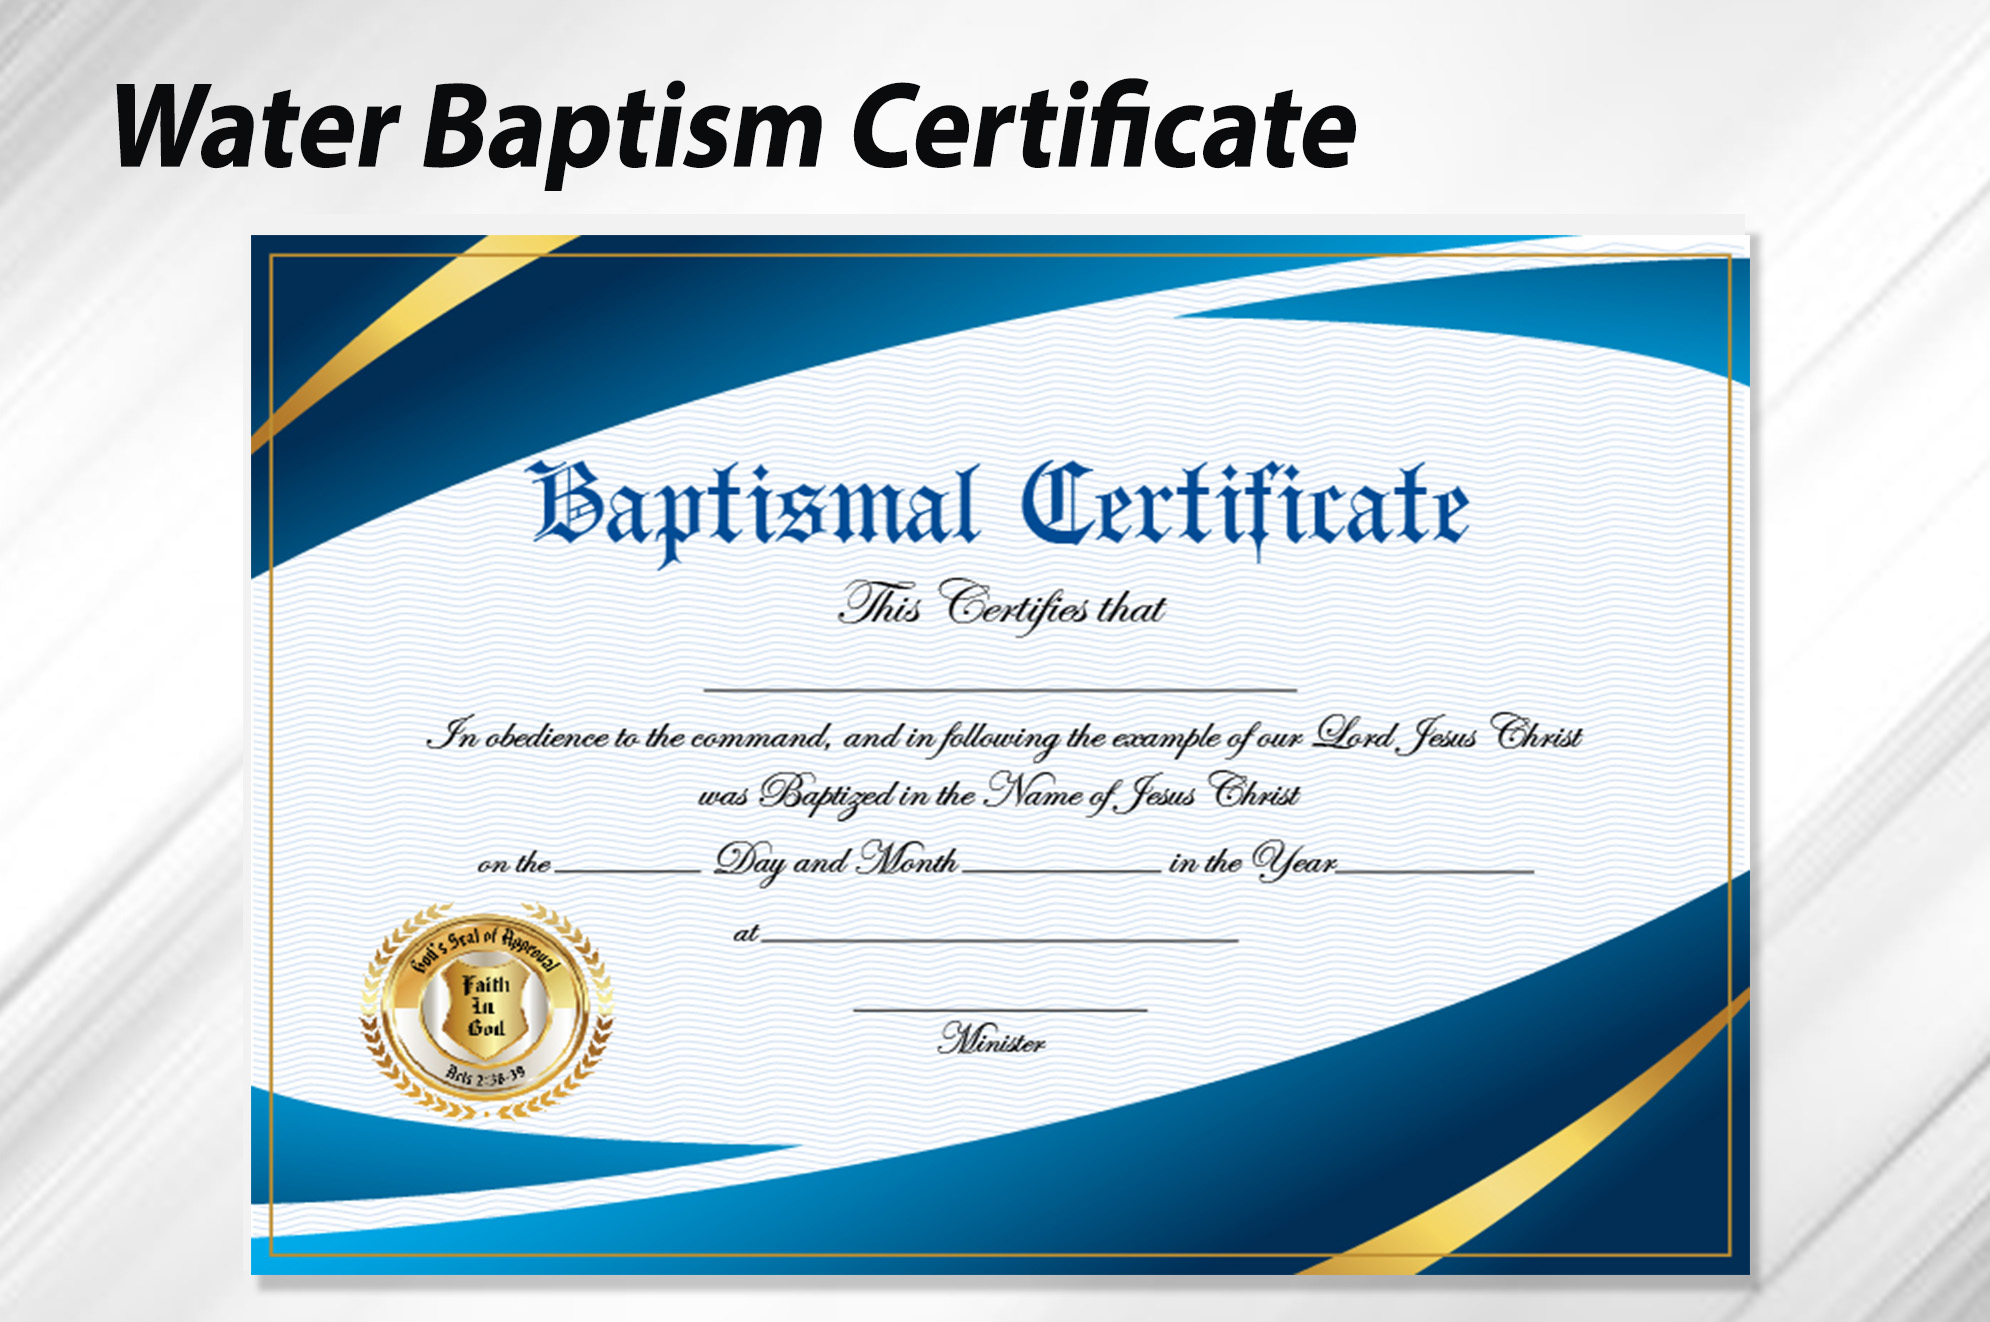 water baptism in jesus name